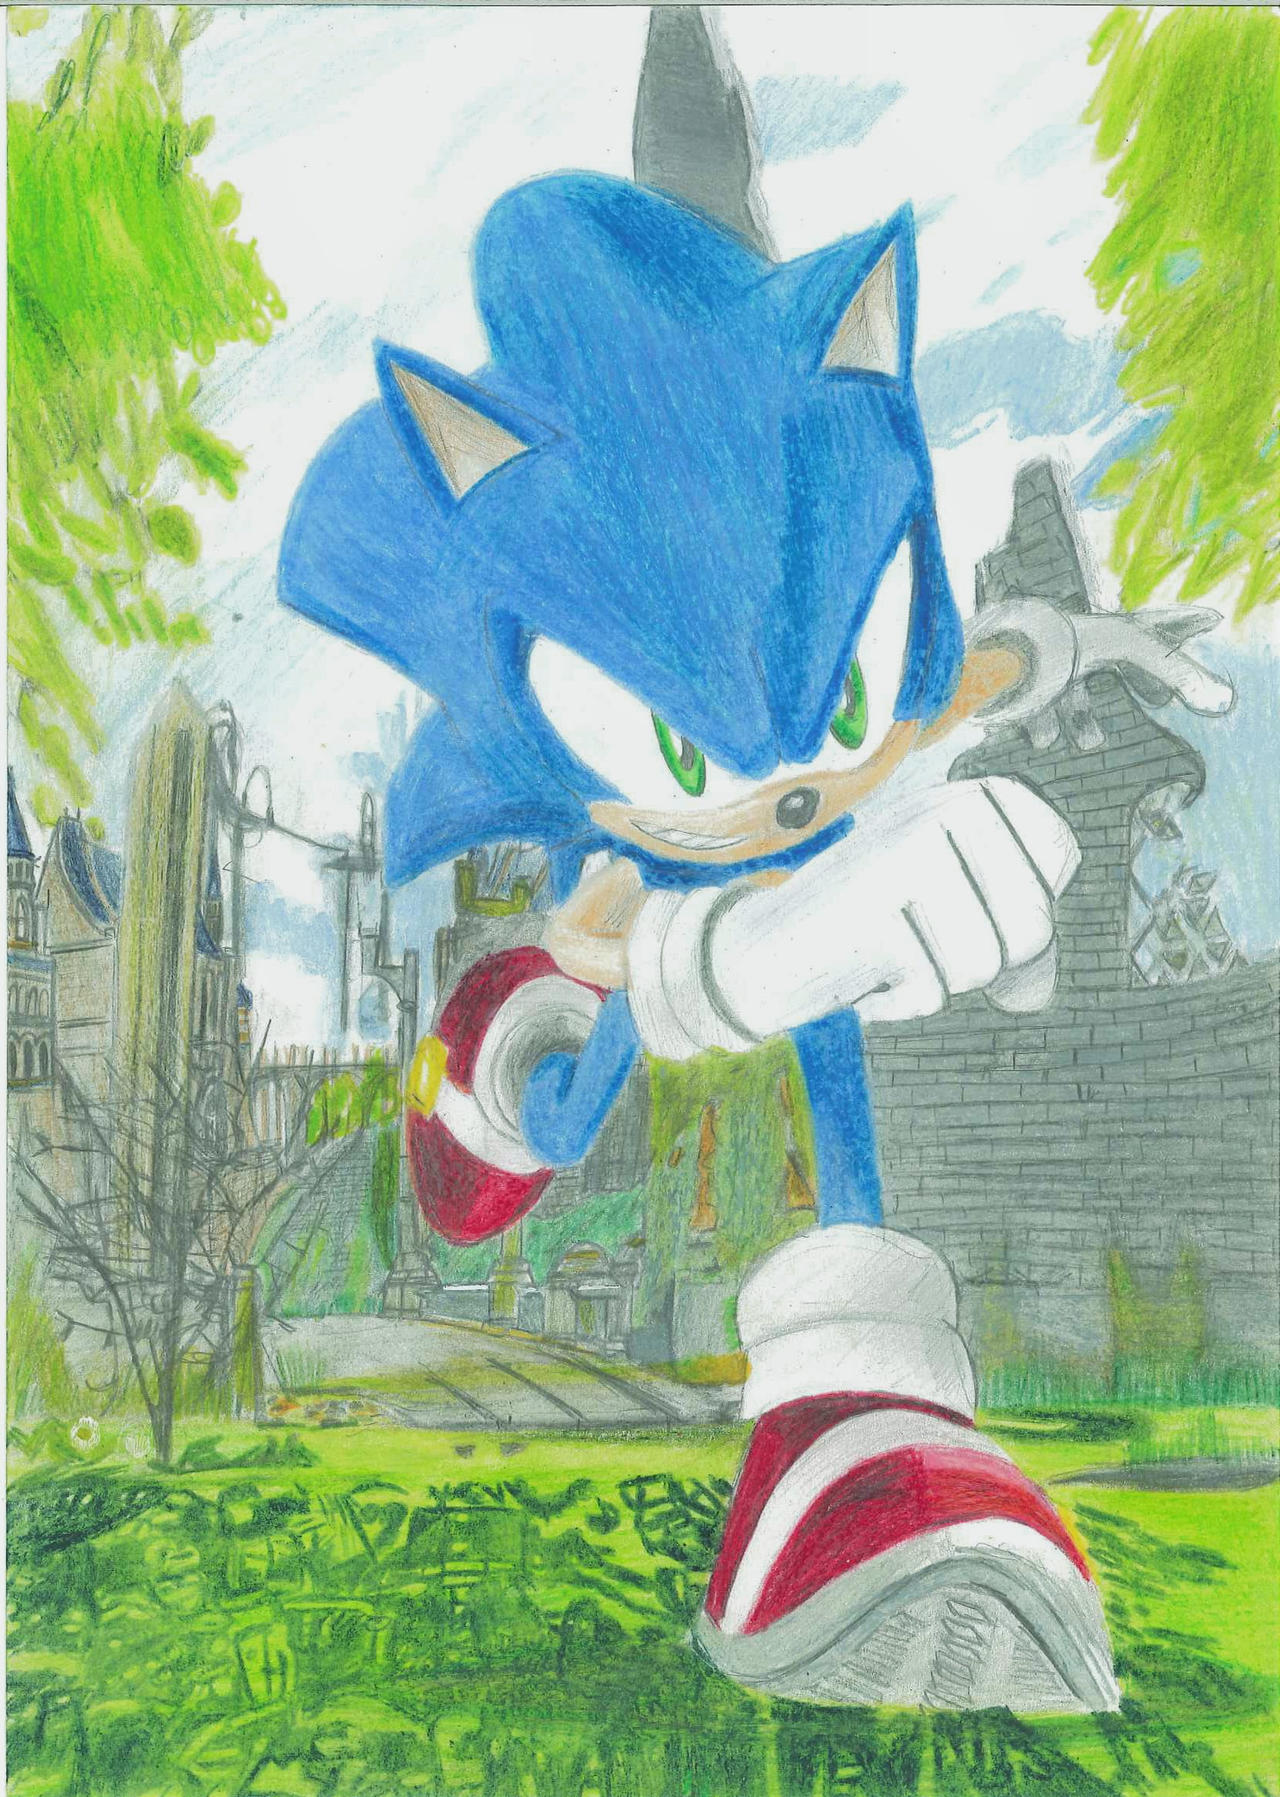 Sonic The Hedgehog [2006] by ManicSam on DeviantArt